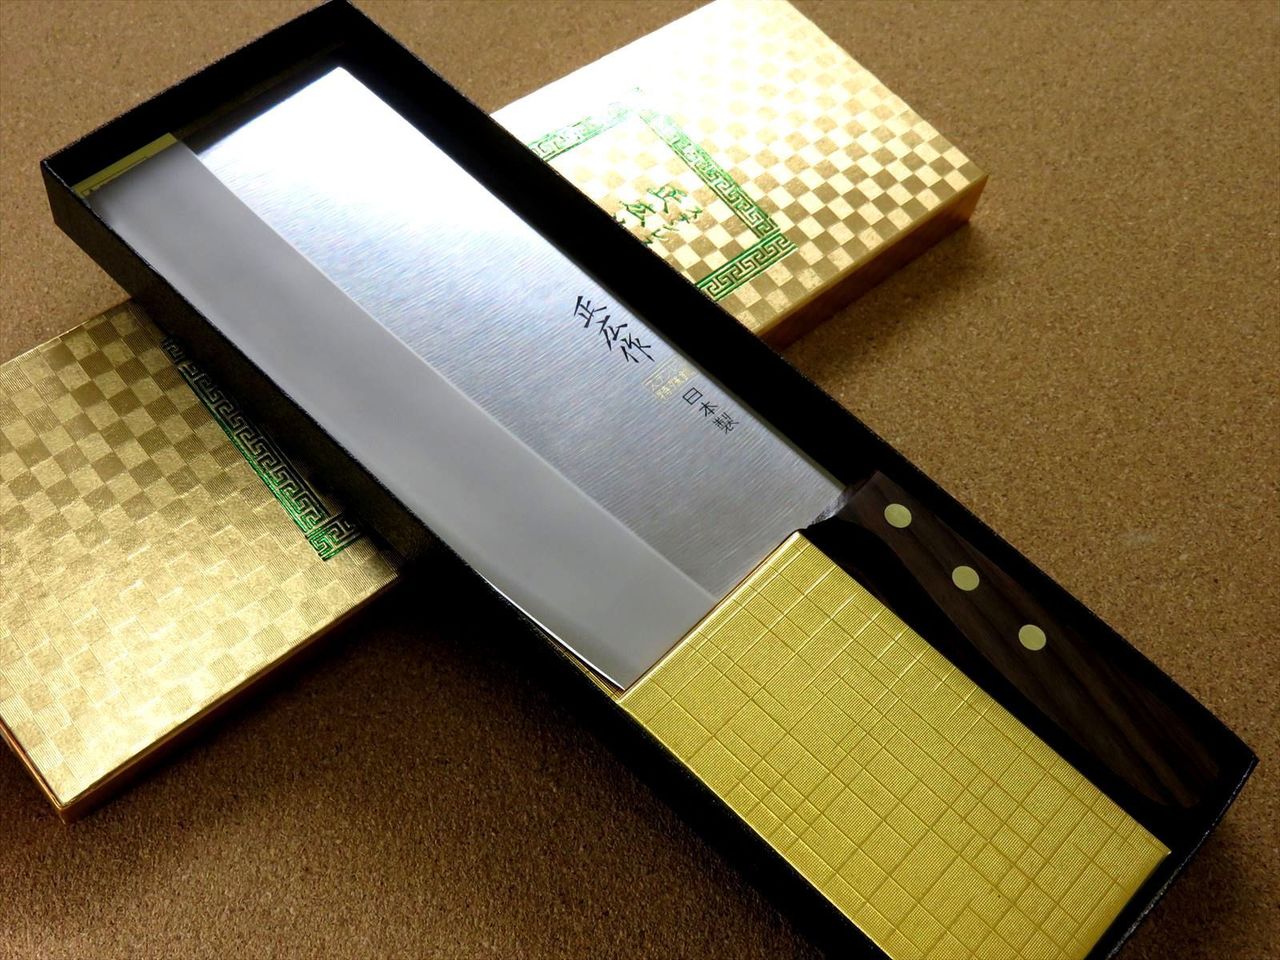 Japanese Masahiro Kitchen Cleaver Chinese Chef Knife 7.7 inch TS-103